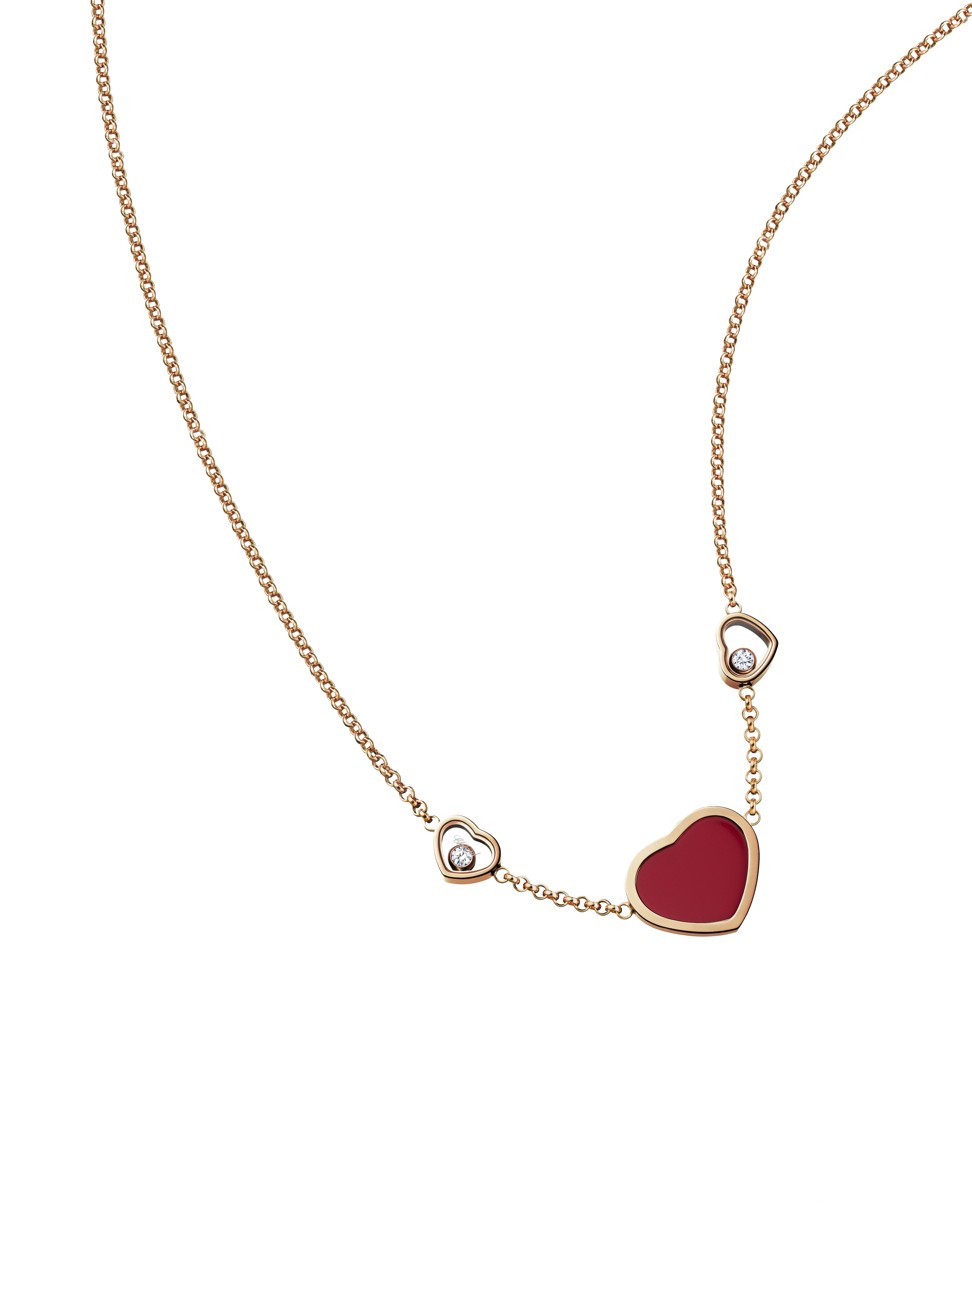 Chopard Happy Hearts necklace. Photo: Chopard